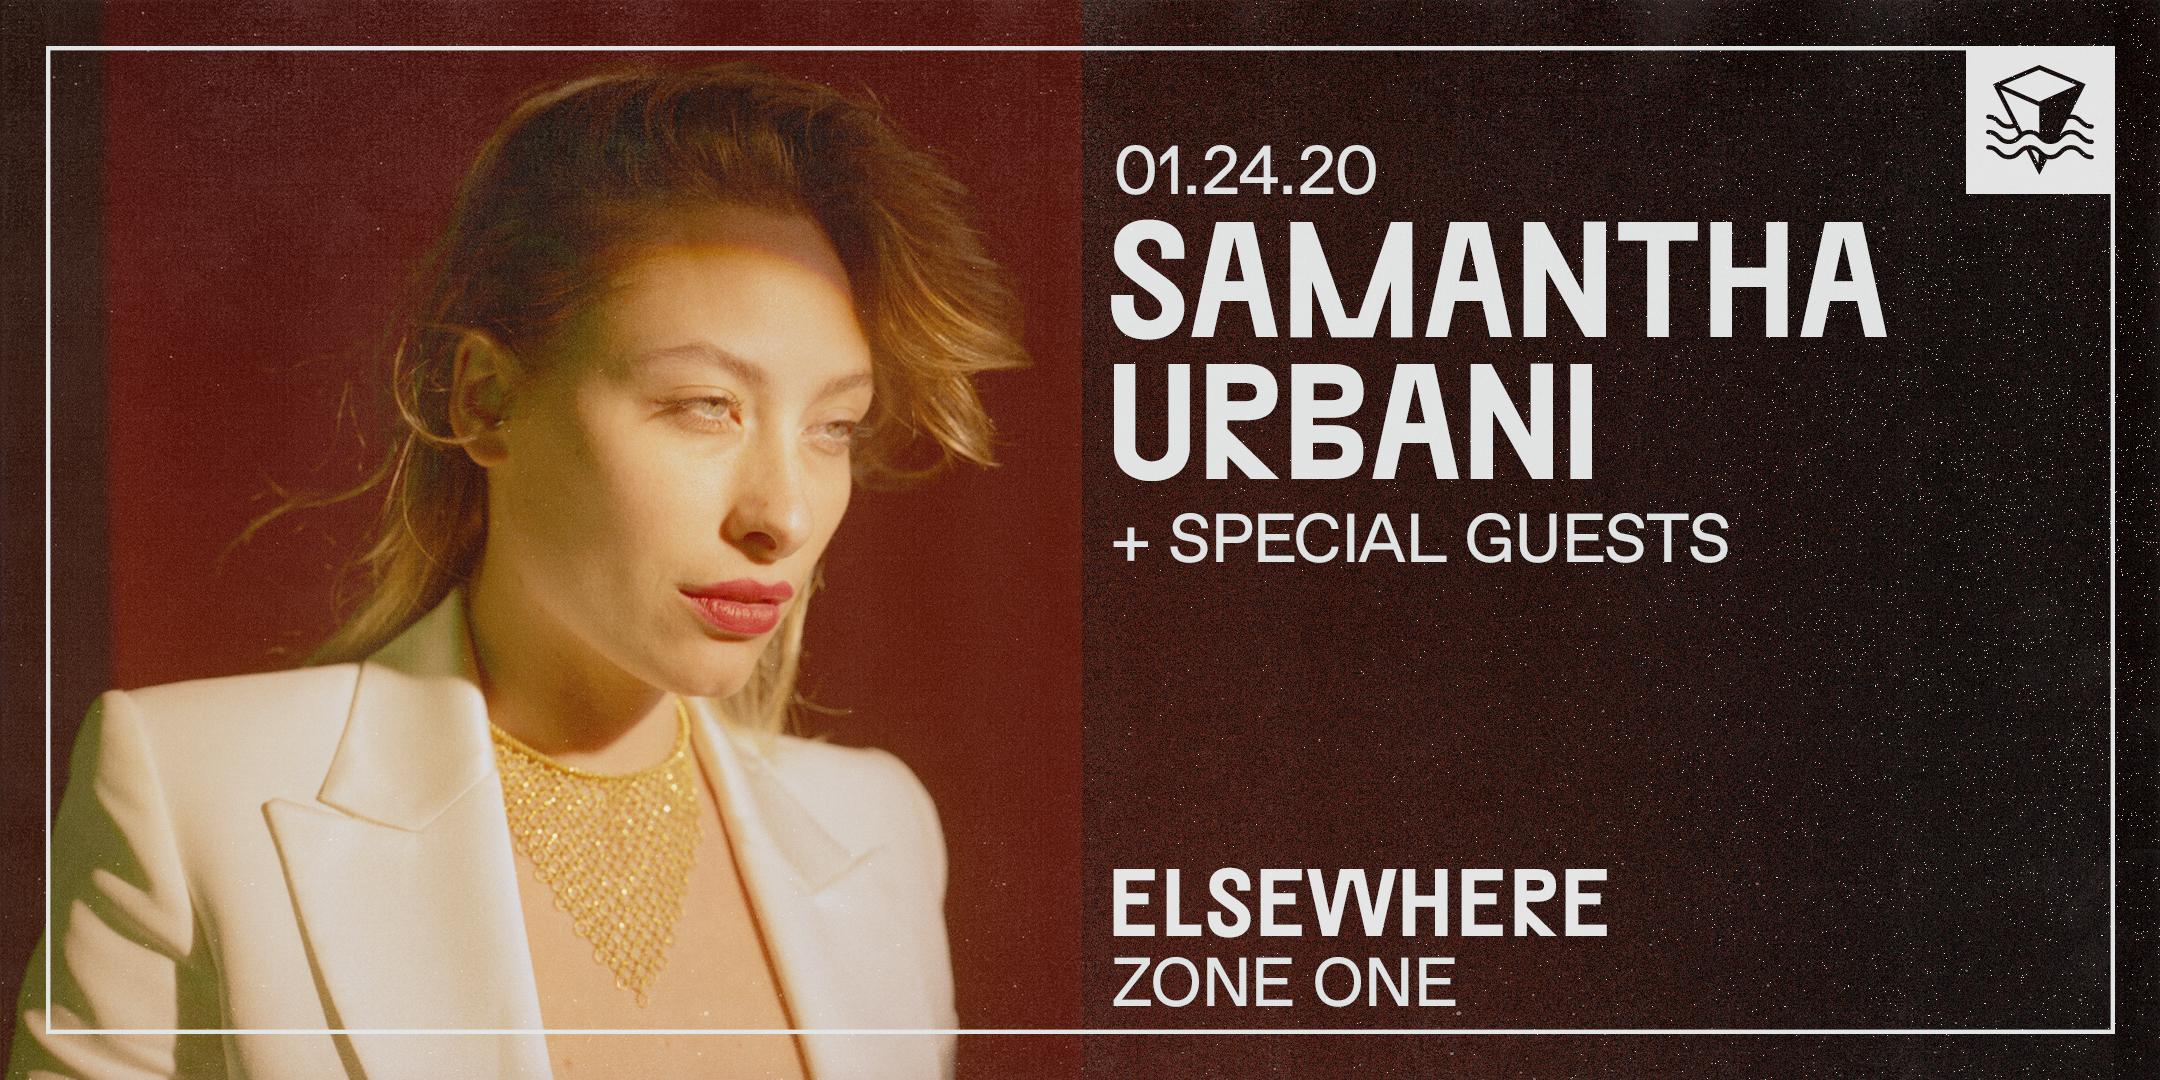 Samantha Urbani @ Elsewhere (Zone One)